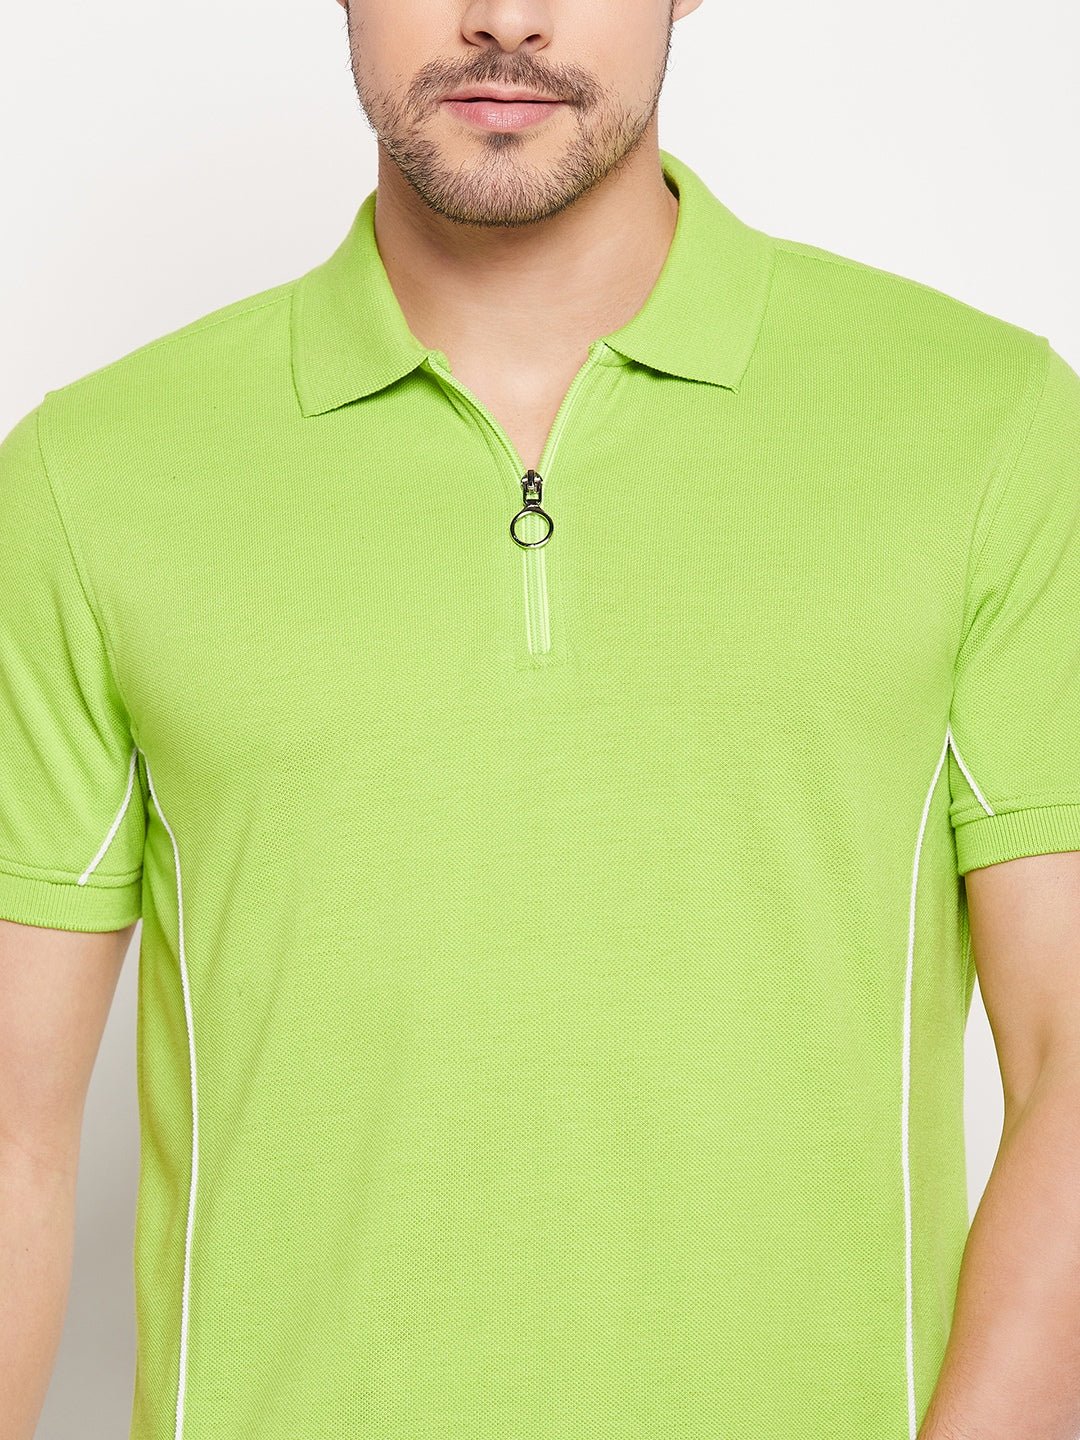 Lime Green Polo T-shirt - clubyork